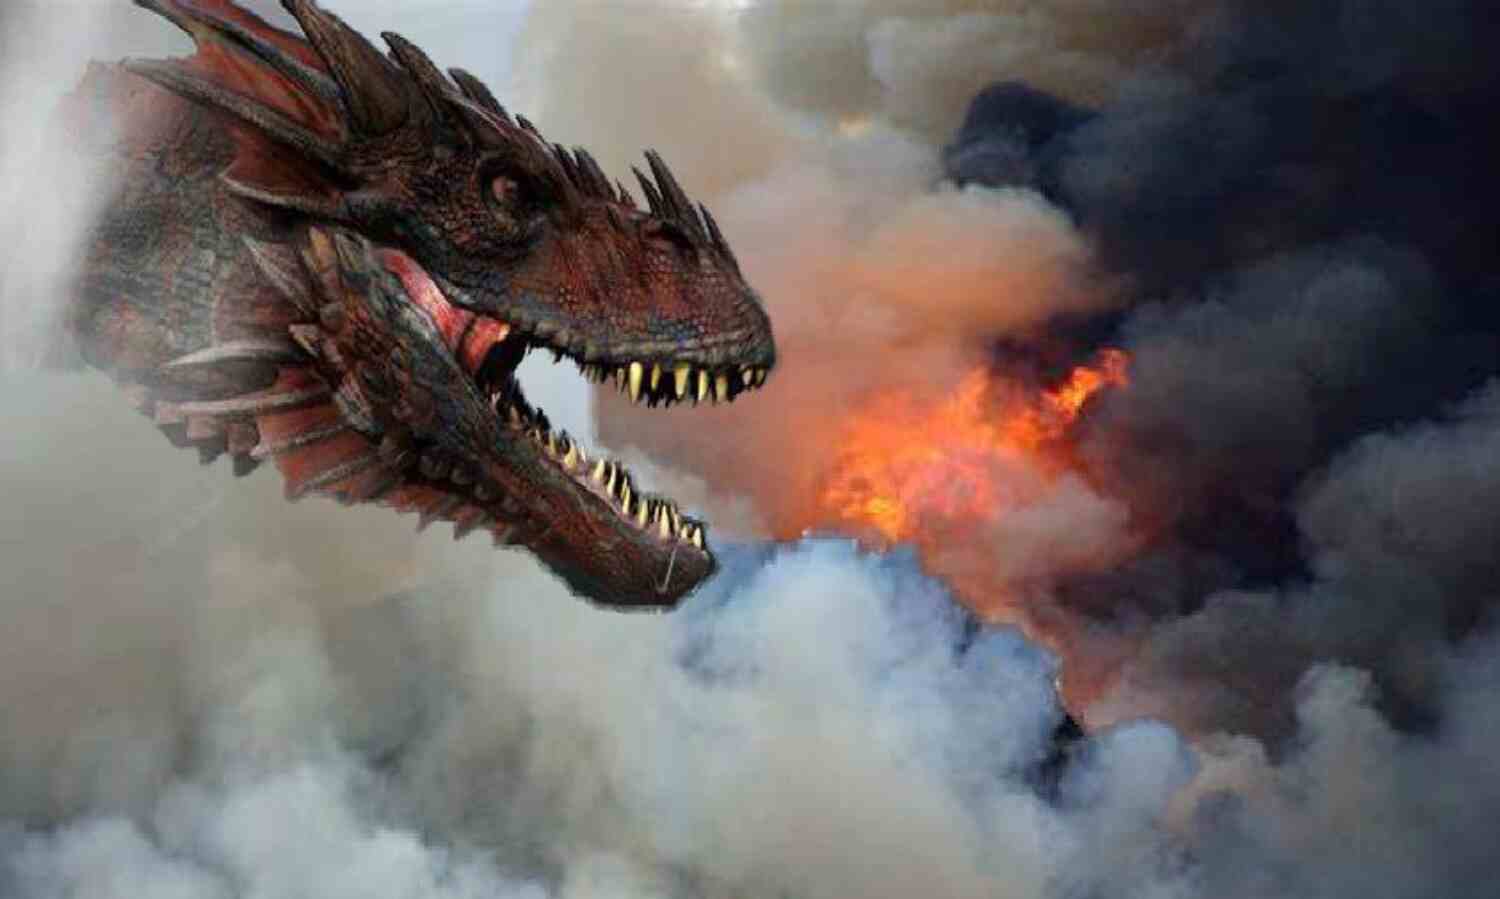 House of the Dragon Season 2 Begins Production! - HIGH ON CINEMA